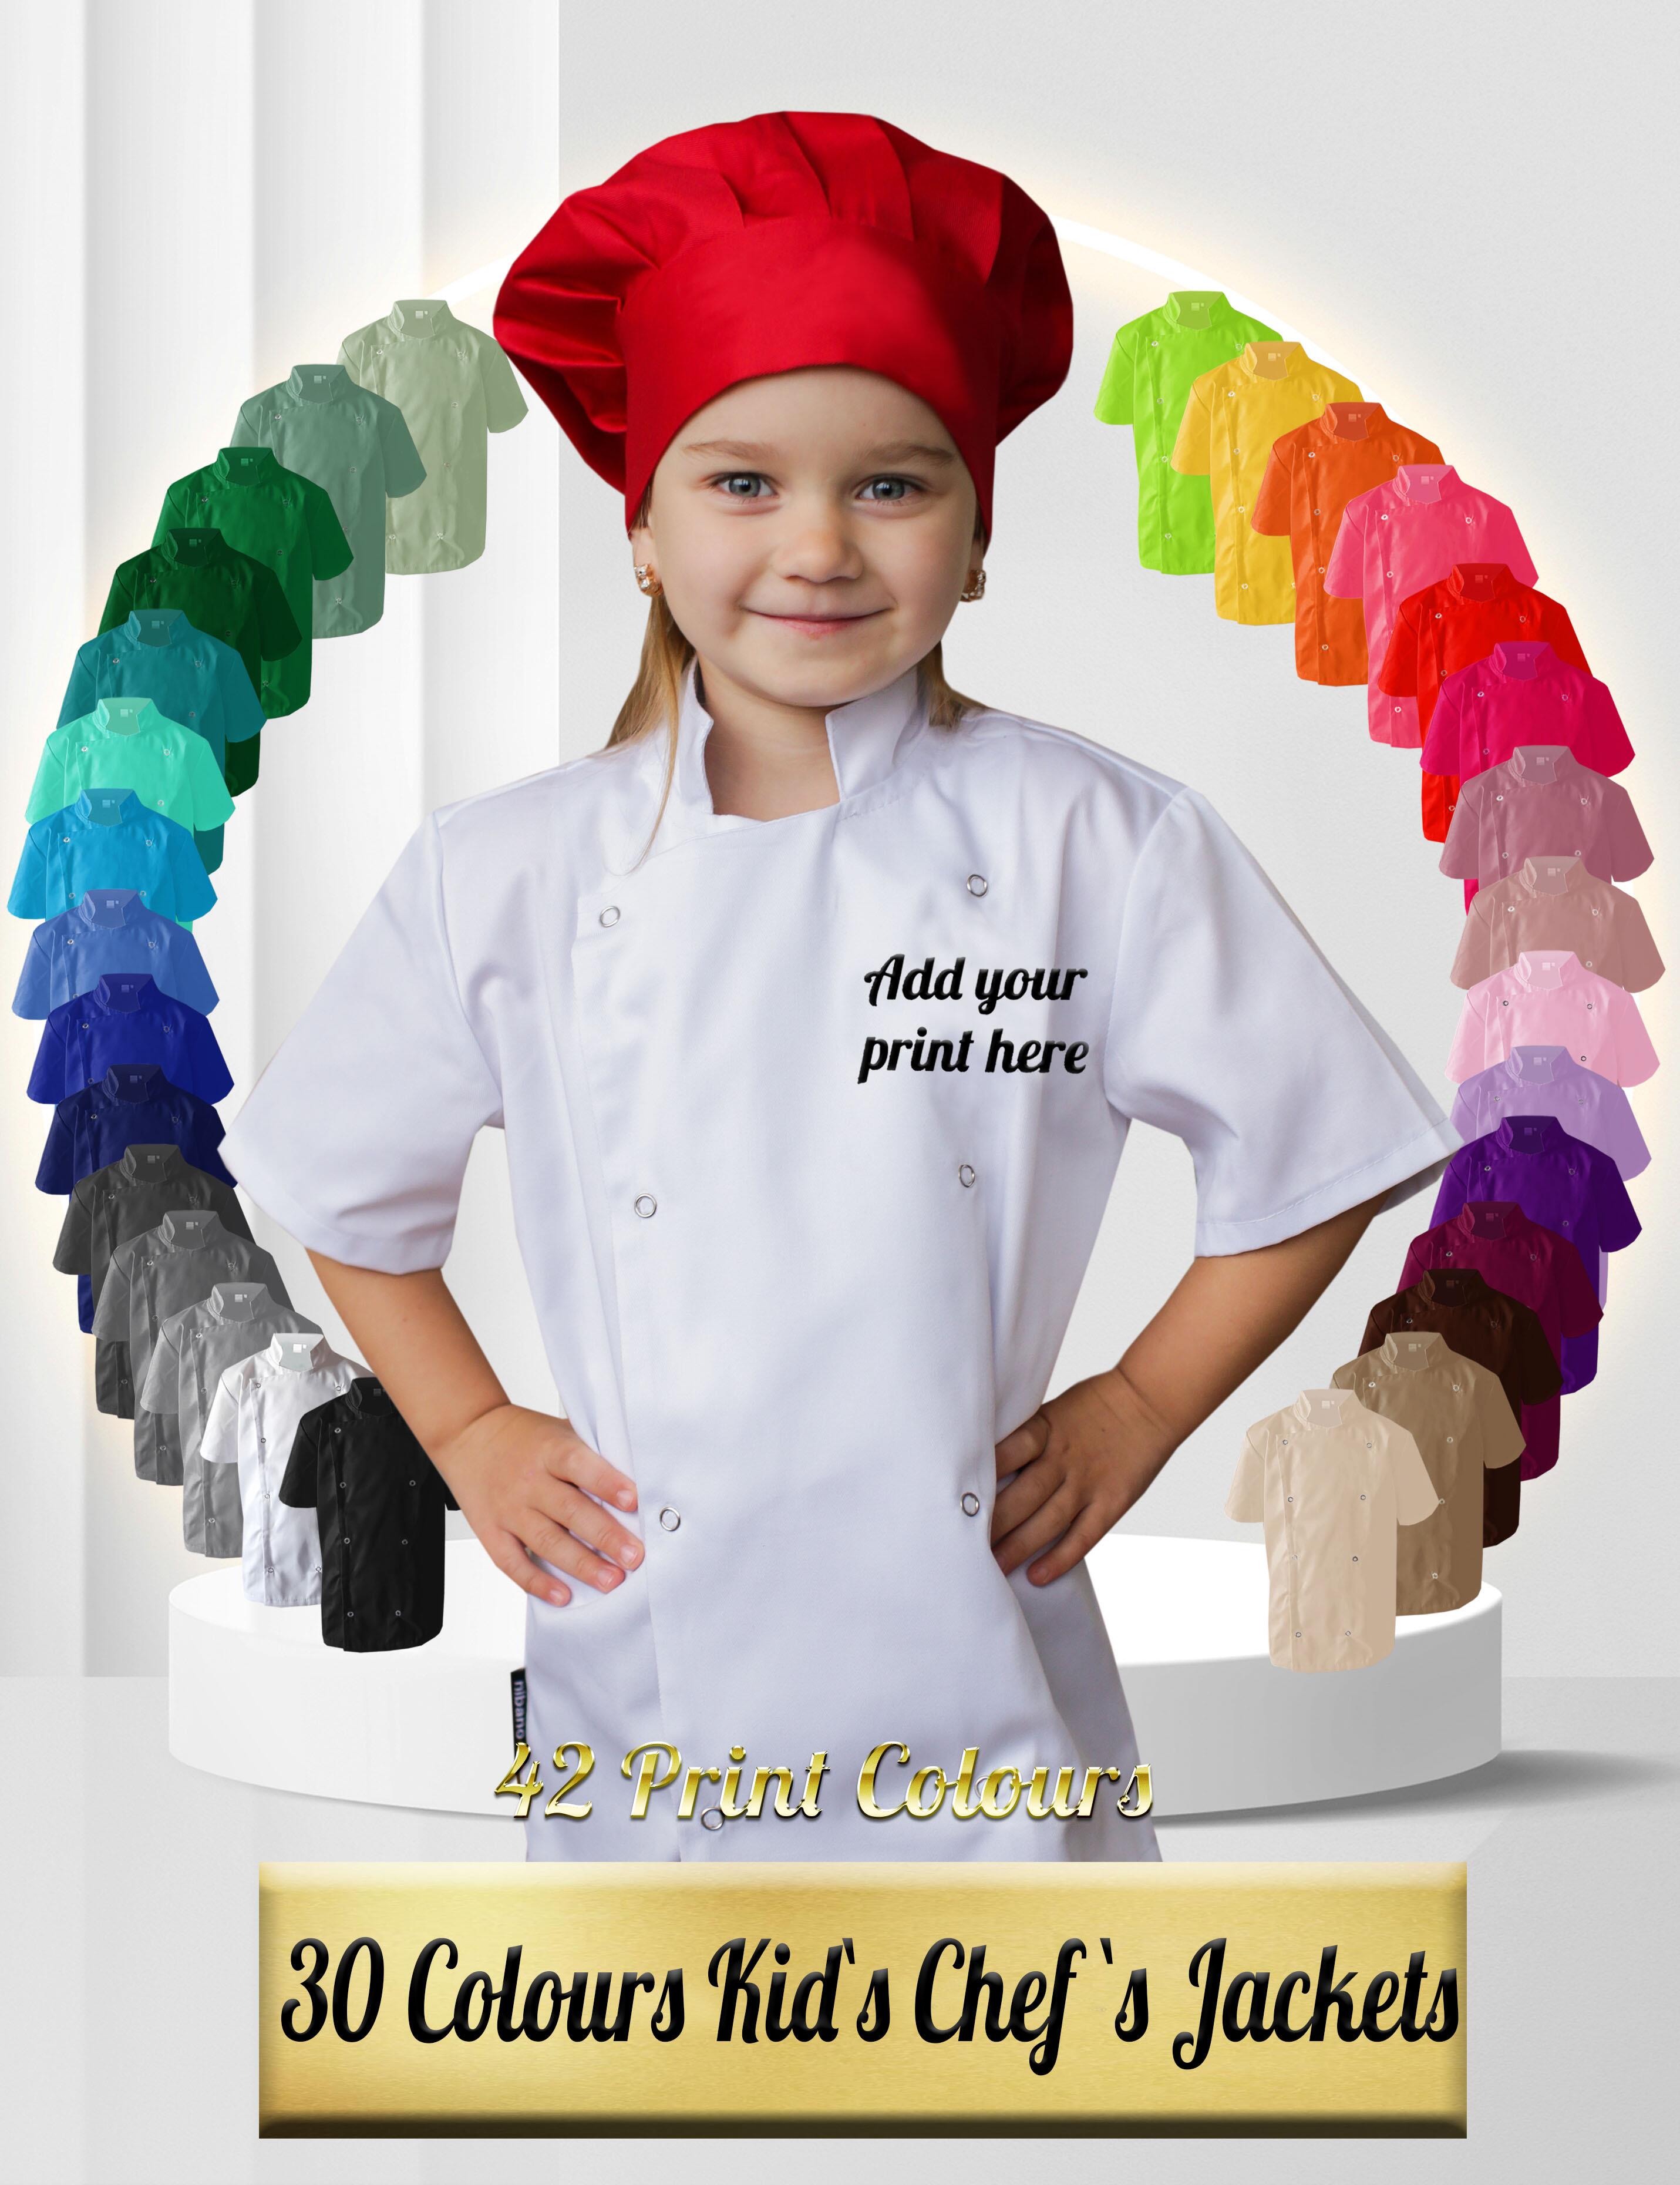 Personalised Kid's chef jacket